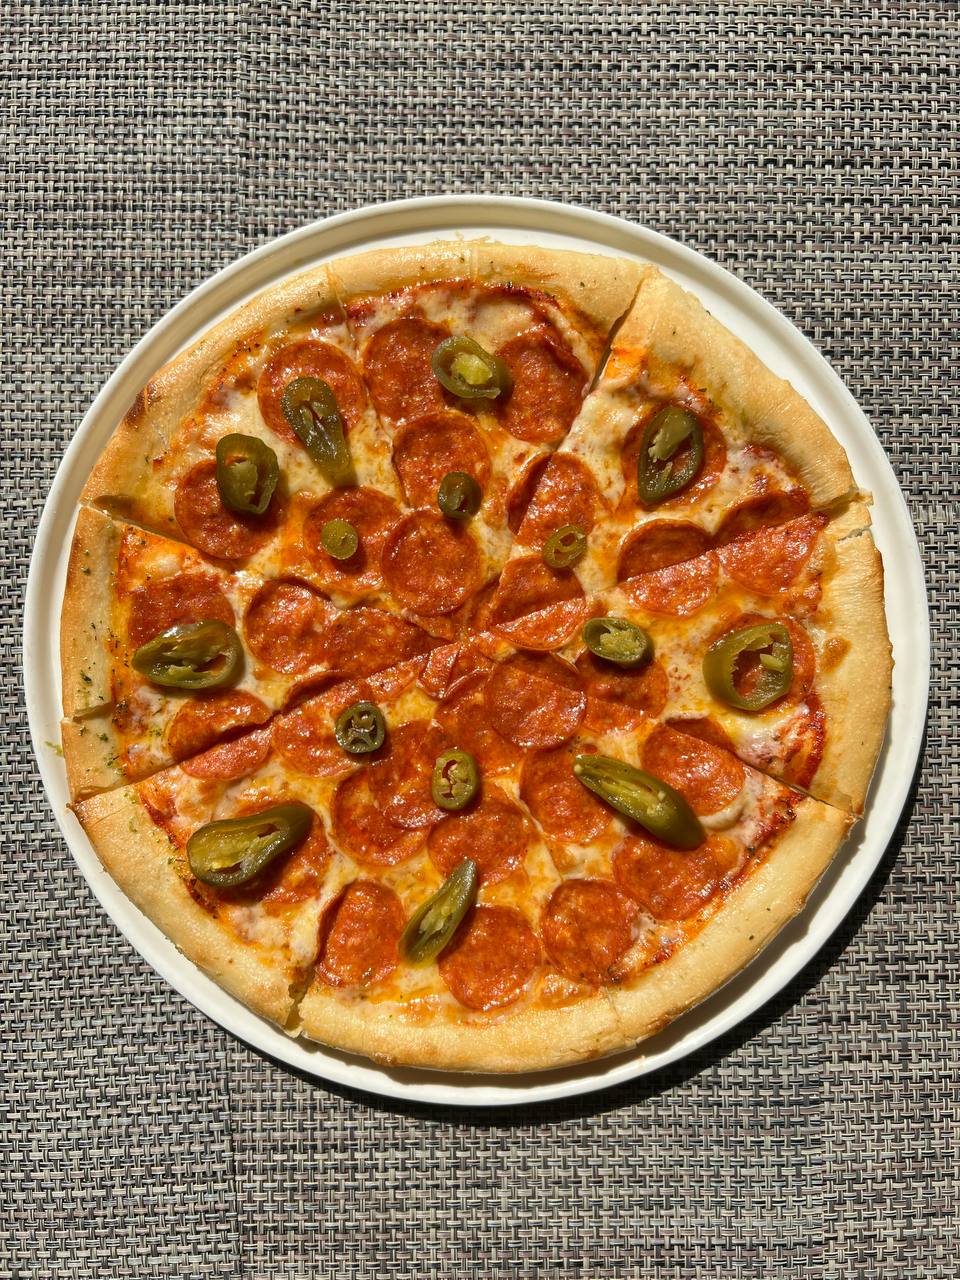 сколько стоит пицца пепперони в новосибирске фото 42